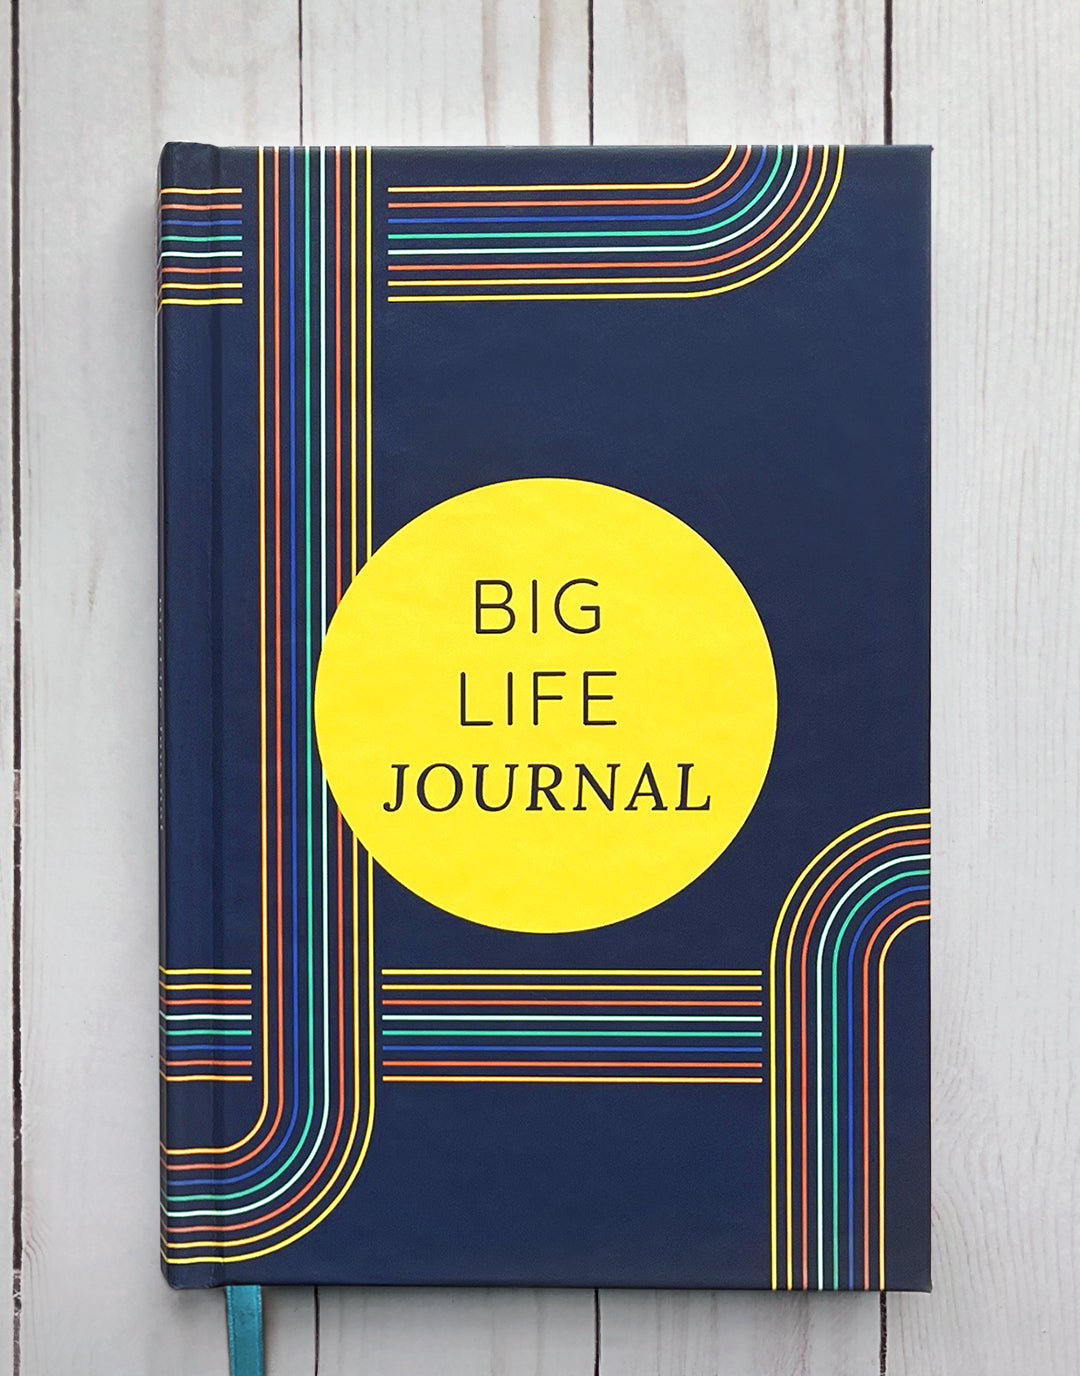 Challenges Kit PDF (ages 5-12) – Big Life Journal